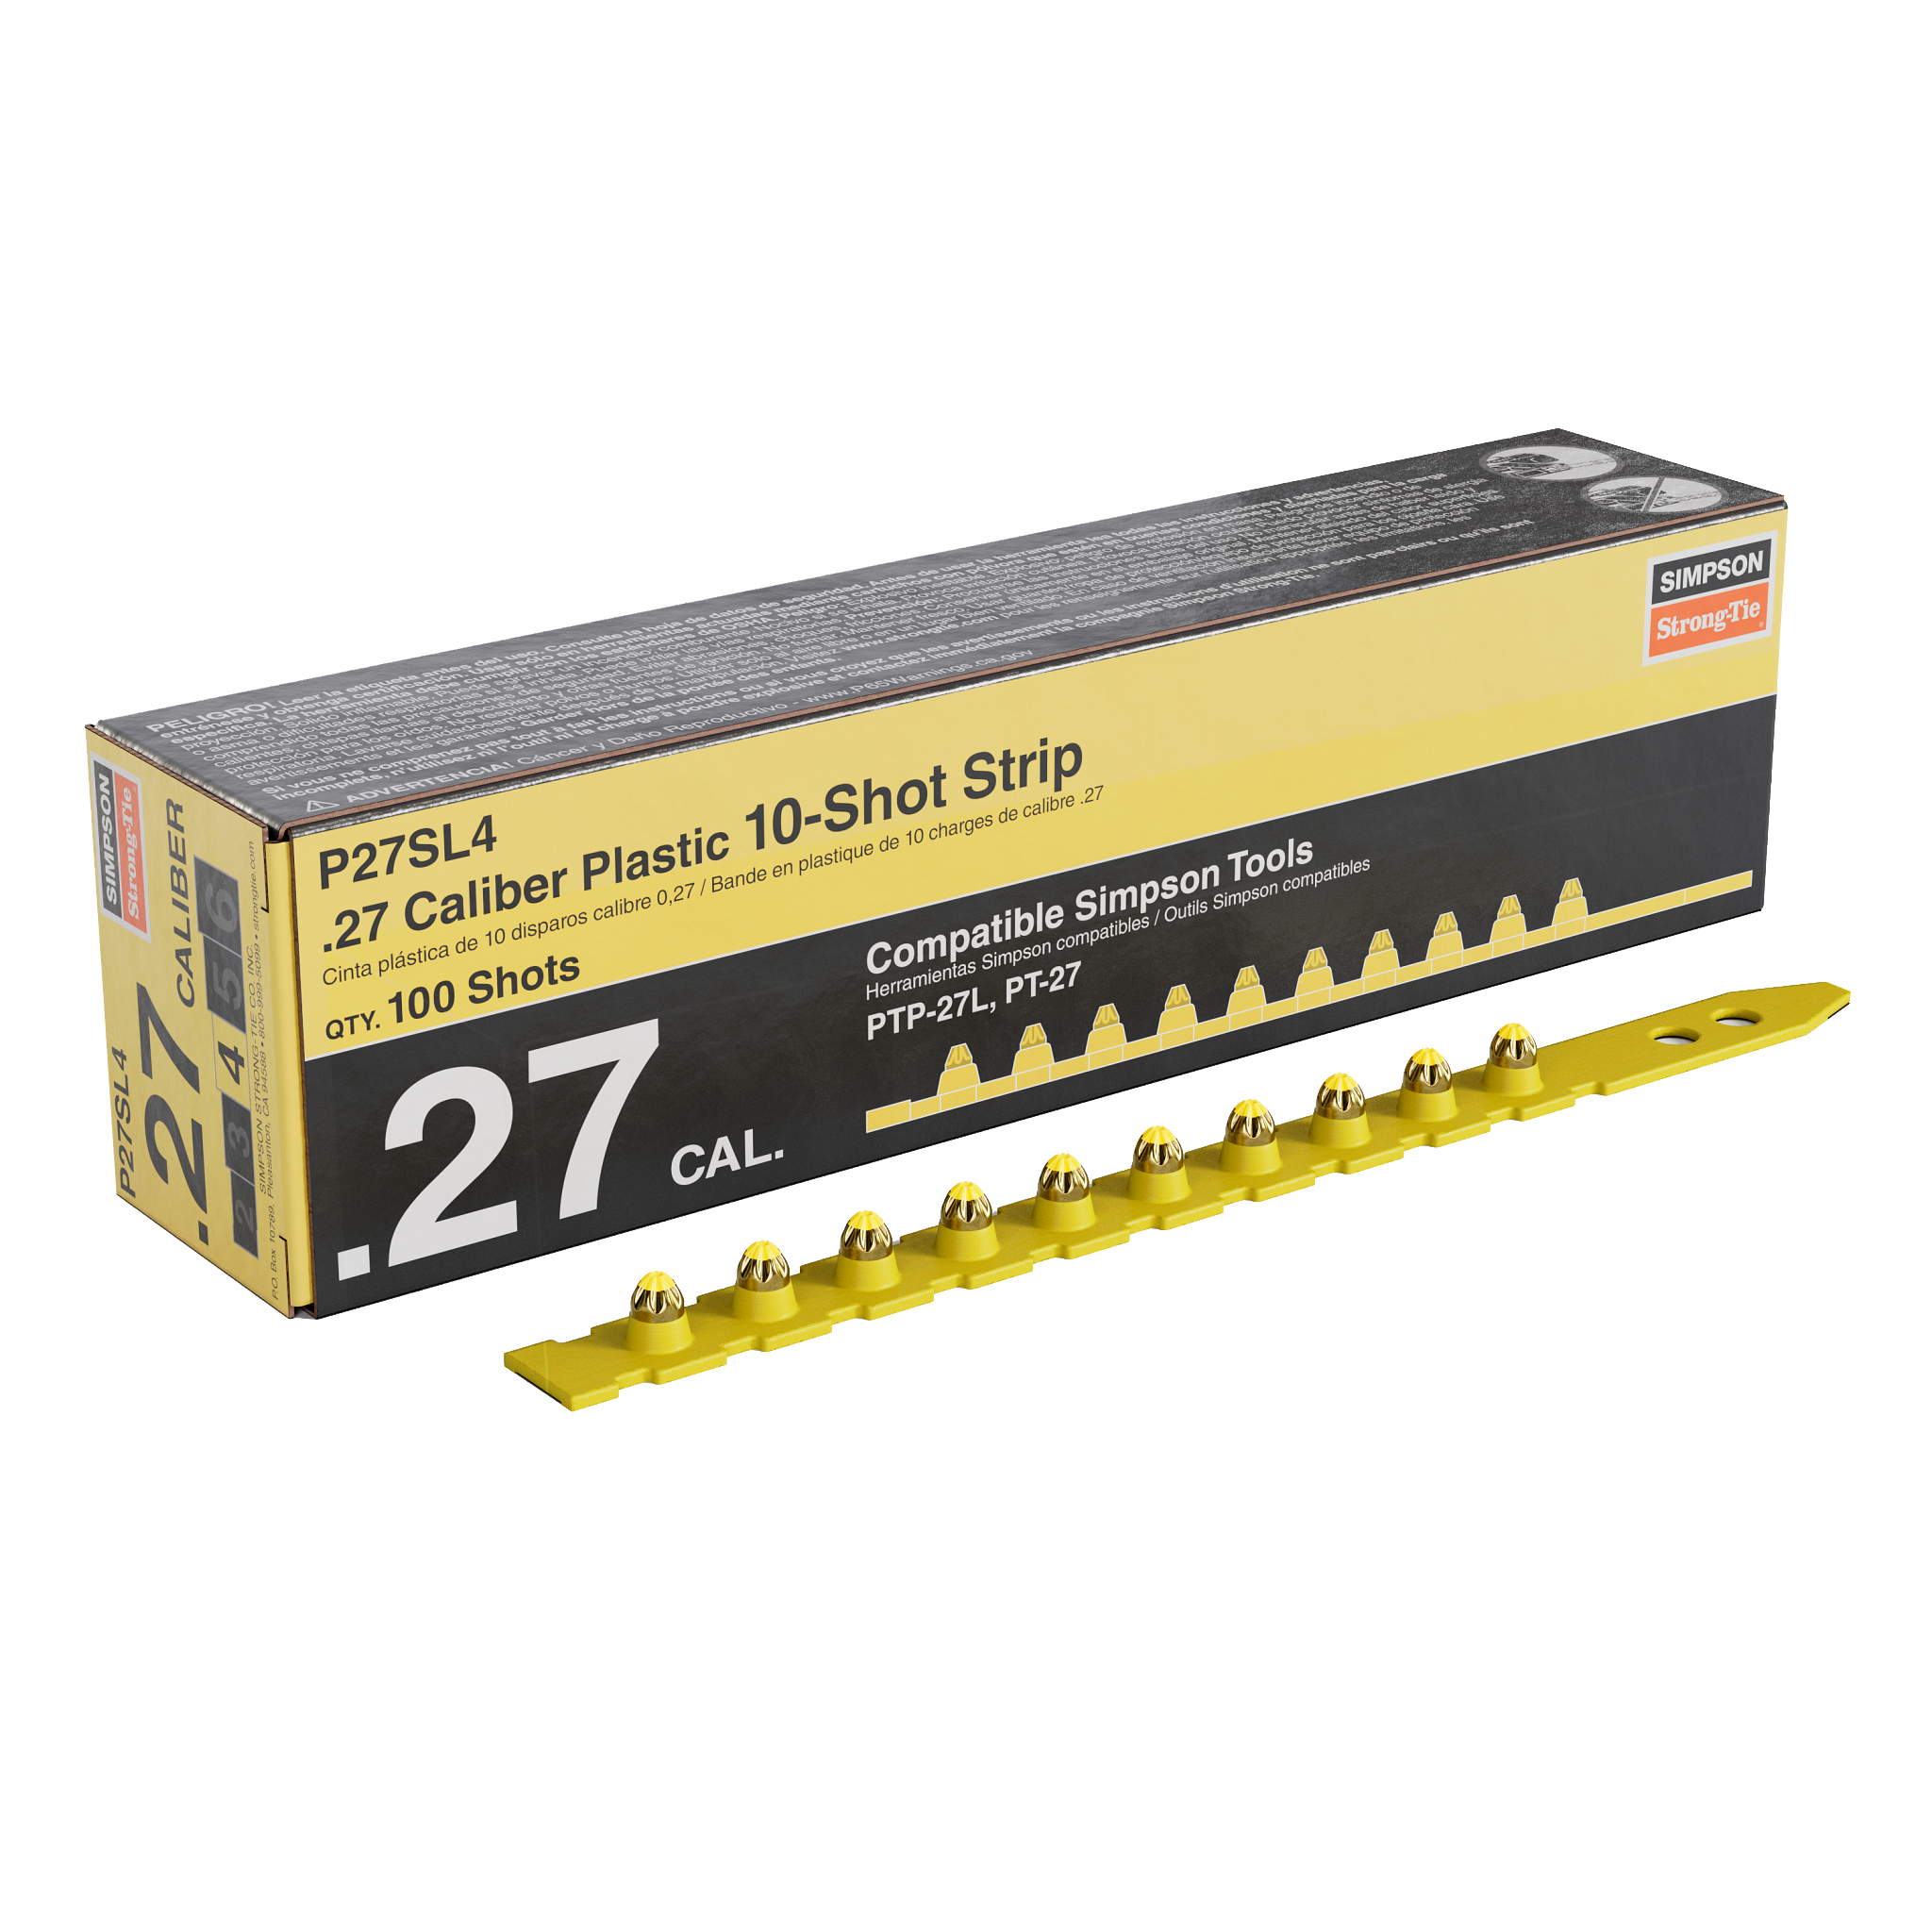 0.27 Caliber P27SL Plastic, 10-Shot Strip Load, Yellow (100/BX)